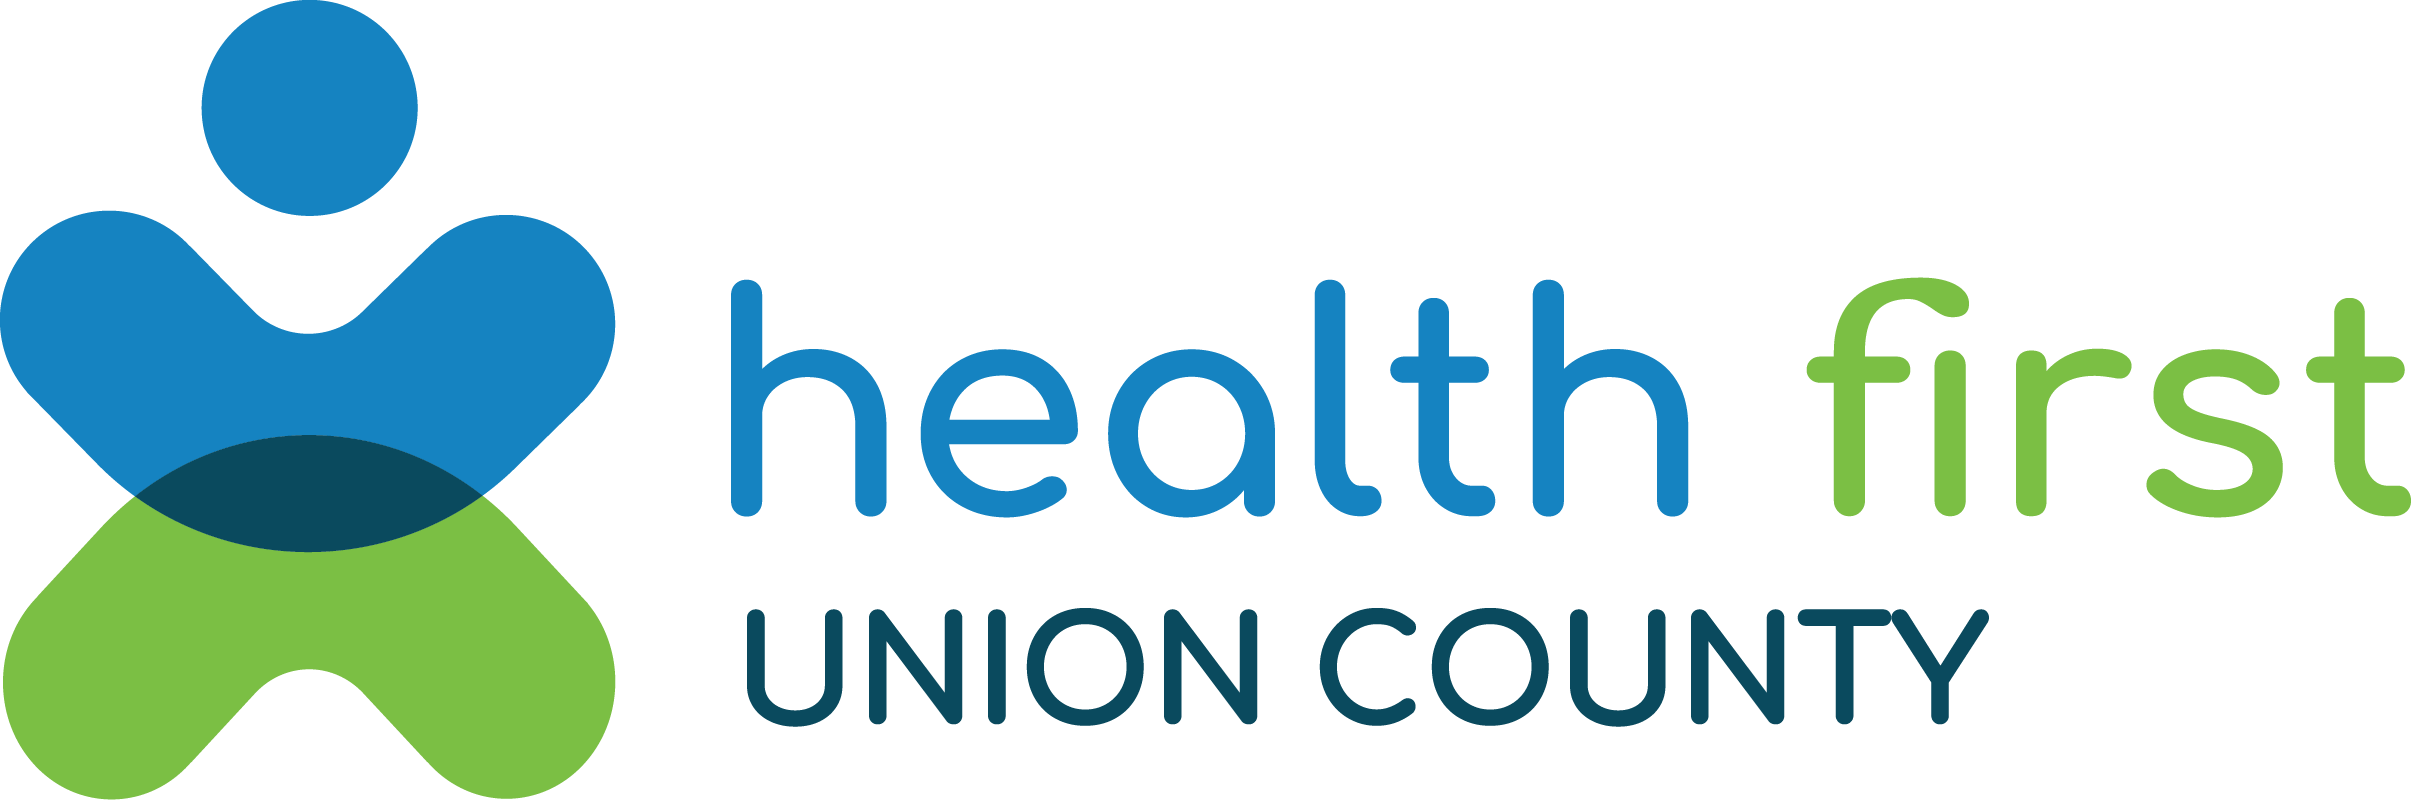 HFI Union County Logo